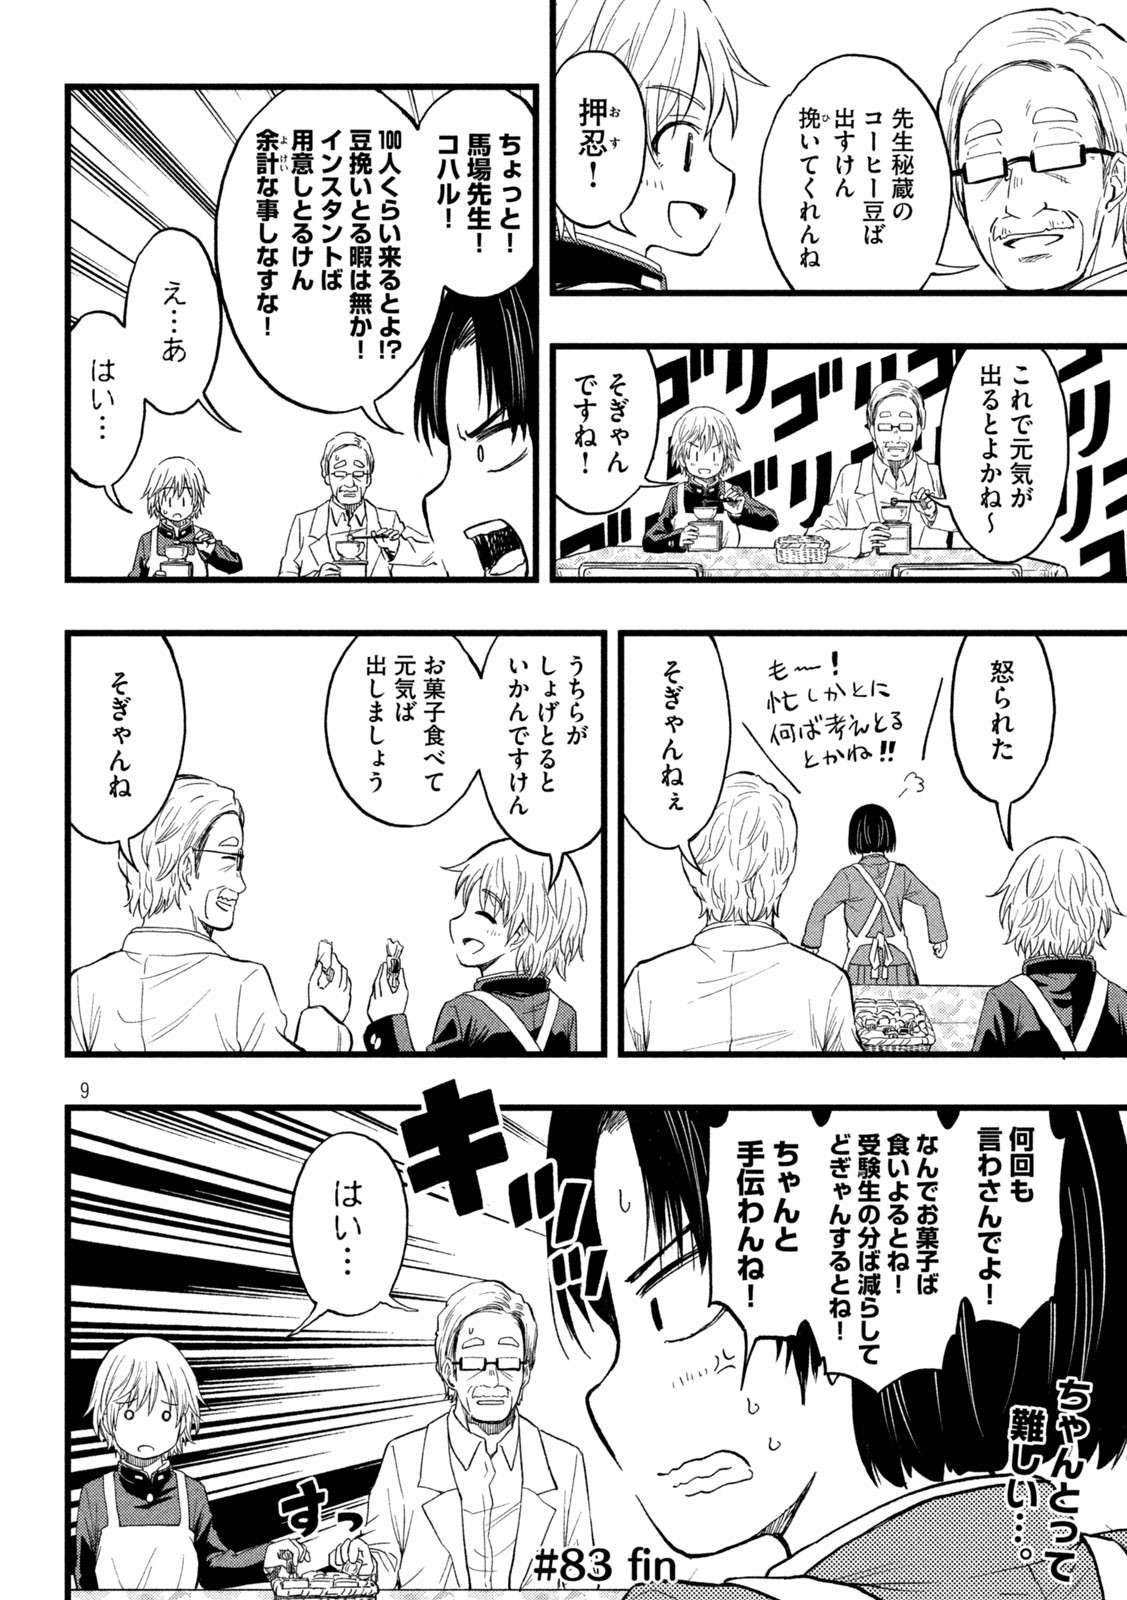 Koharu haru! - Chapter 83 - Page 4